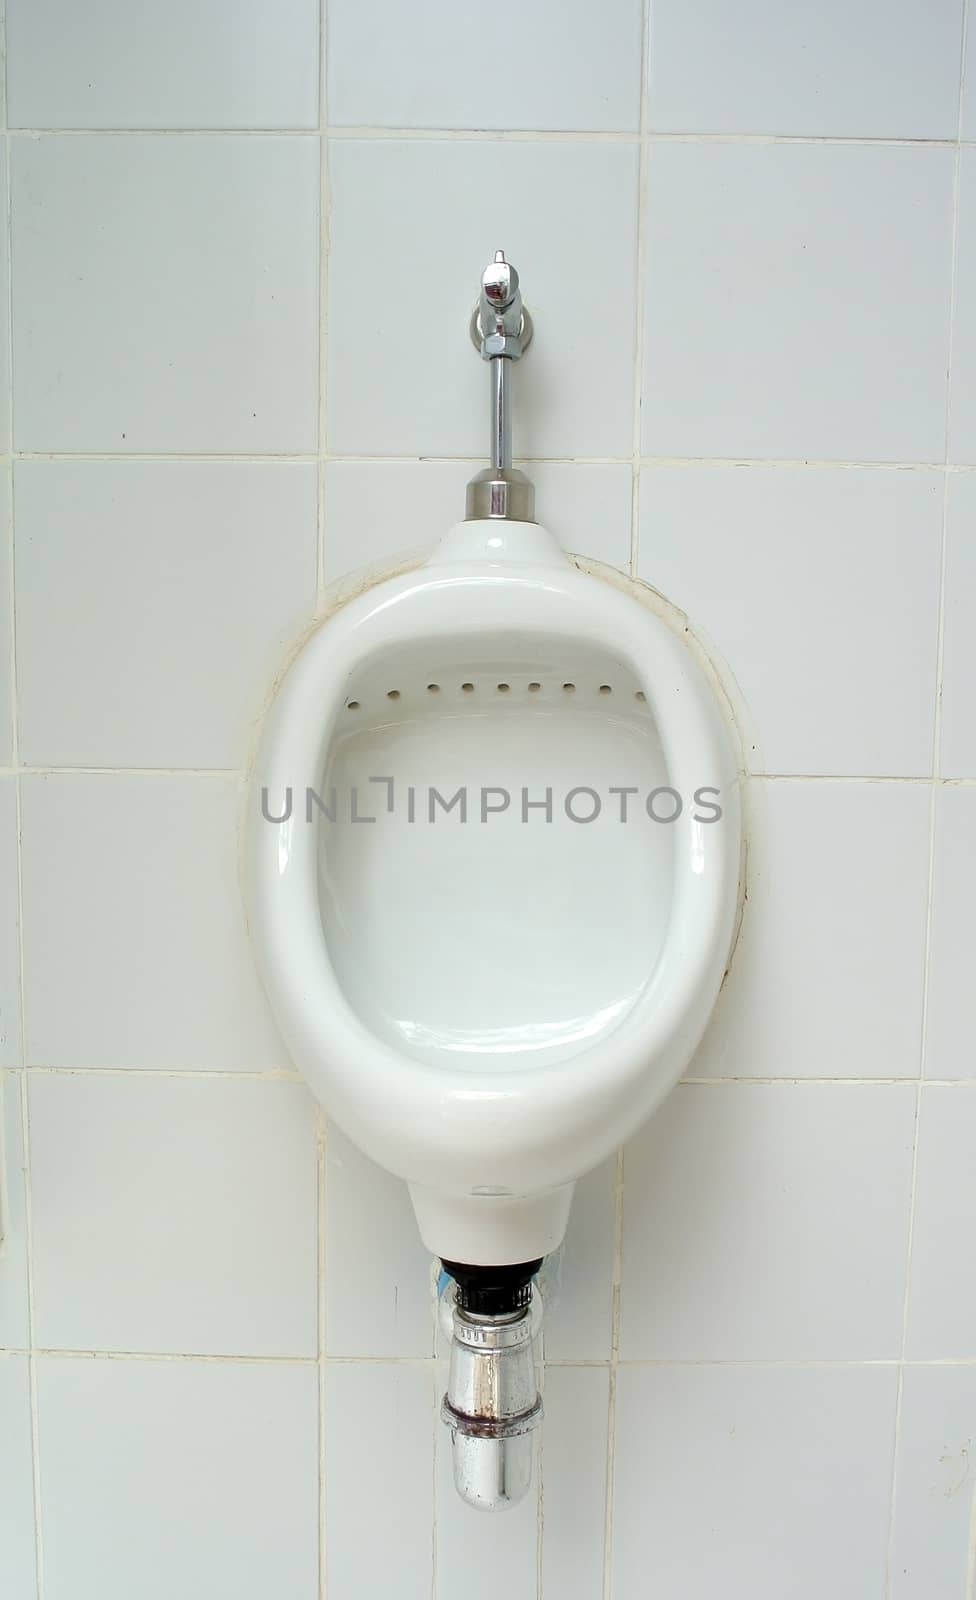 White ceramic sanitary ware in restroom by sommai